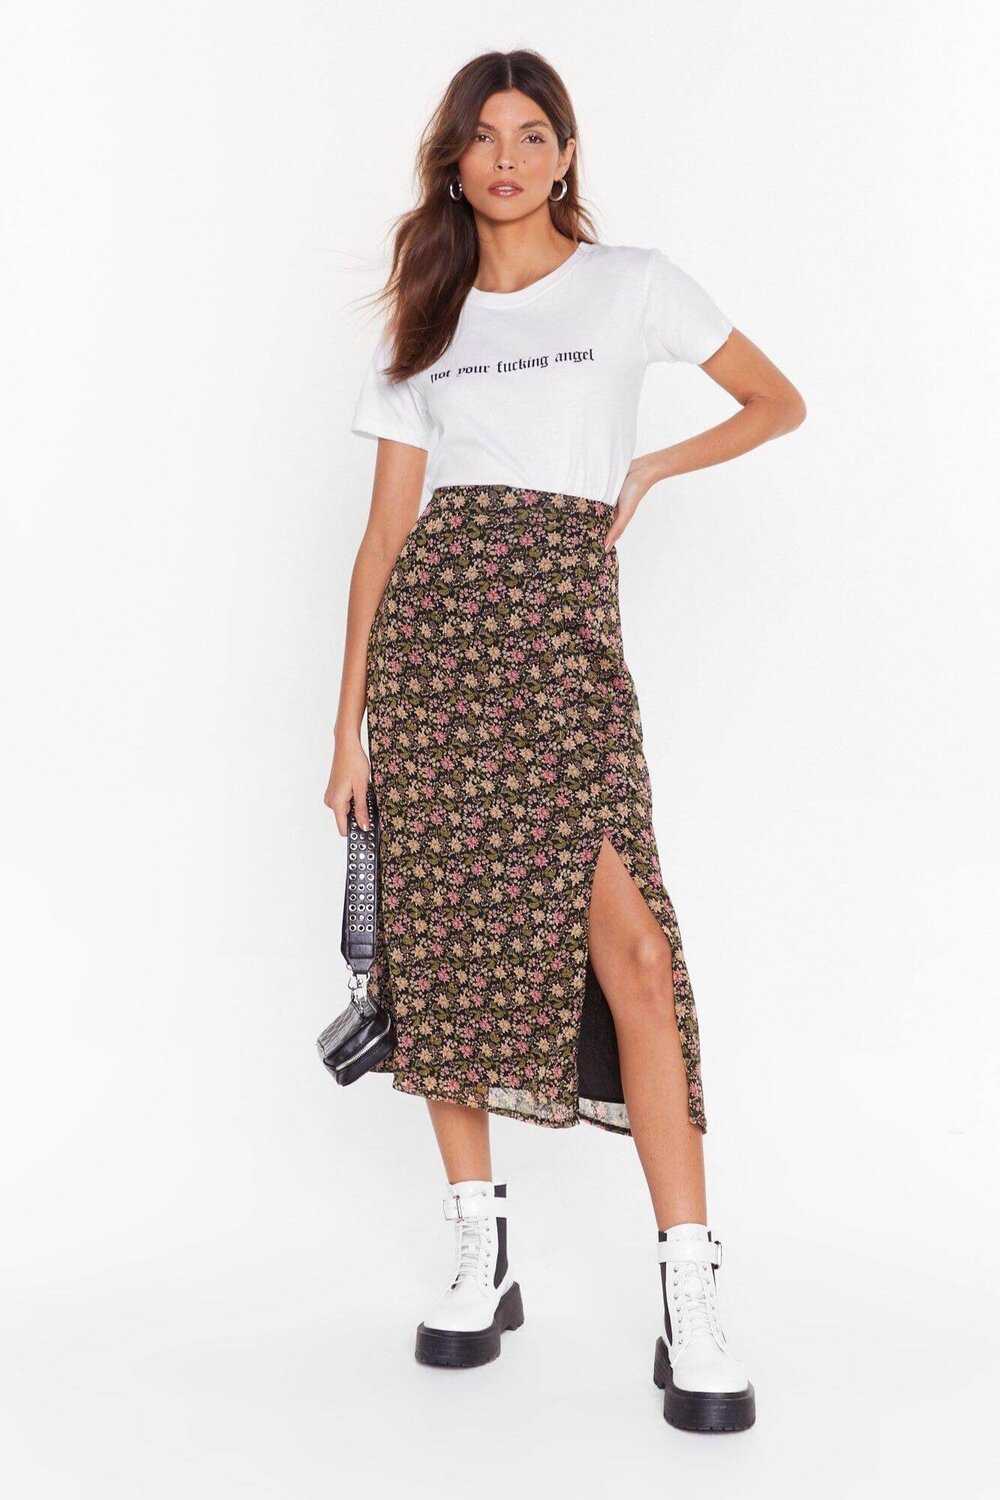 Chiffon Mini Skirt, $28, Nasty Gal